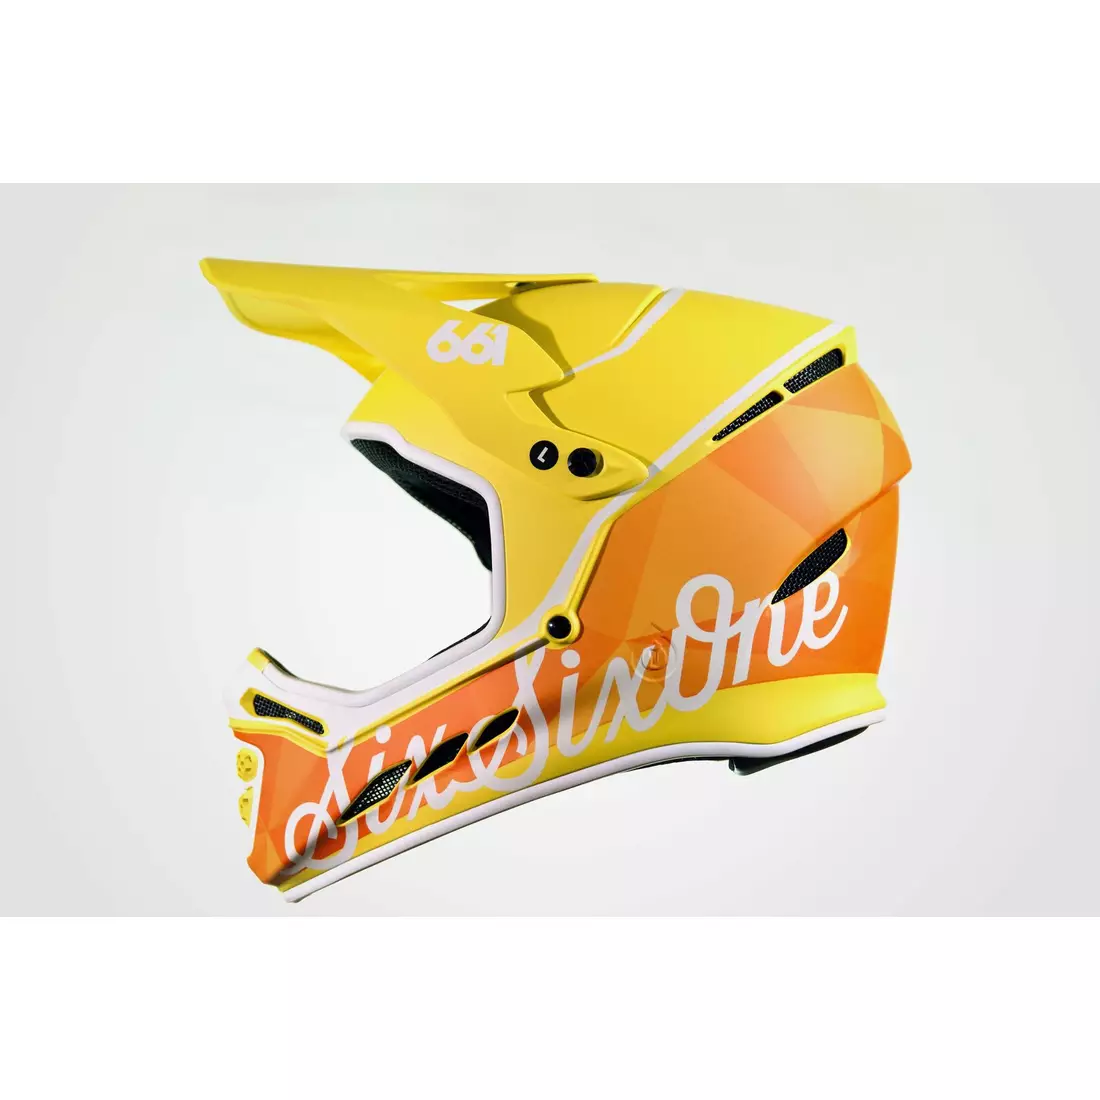 661 RESET GEO CITRUS Bicycle fullface helmet yellow-orange